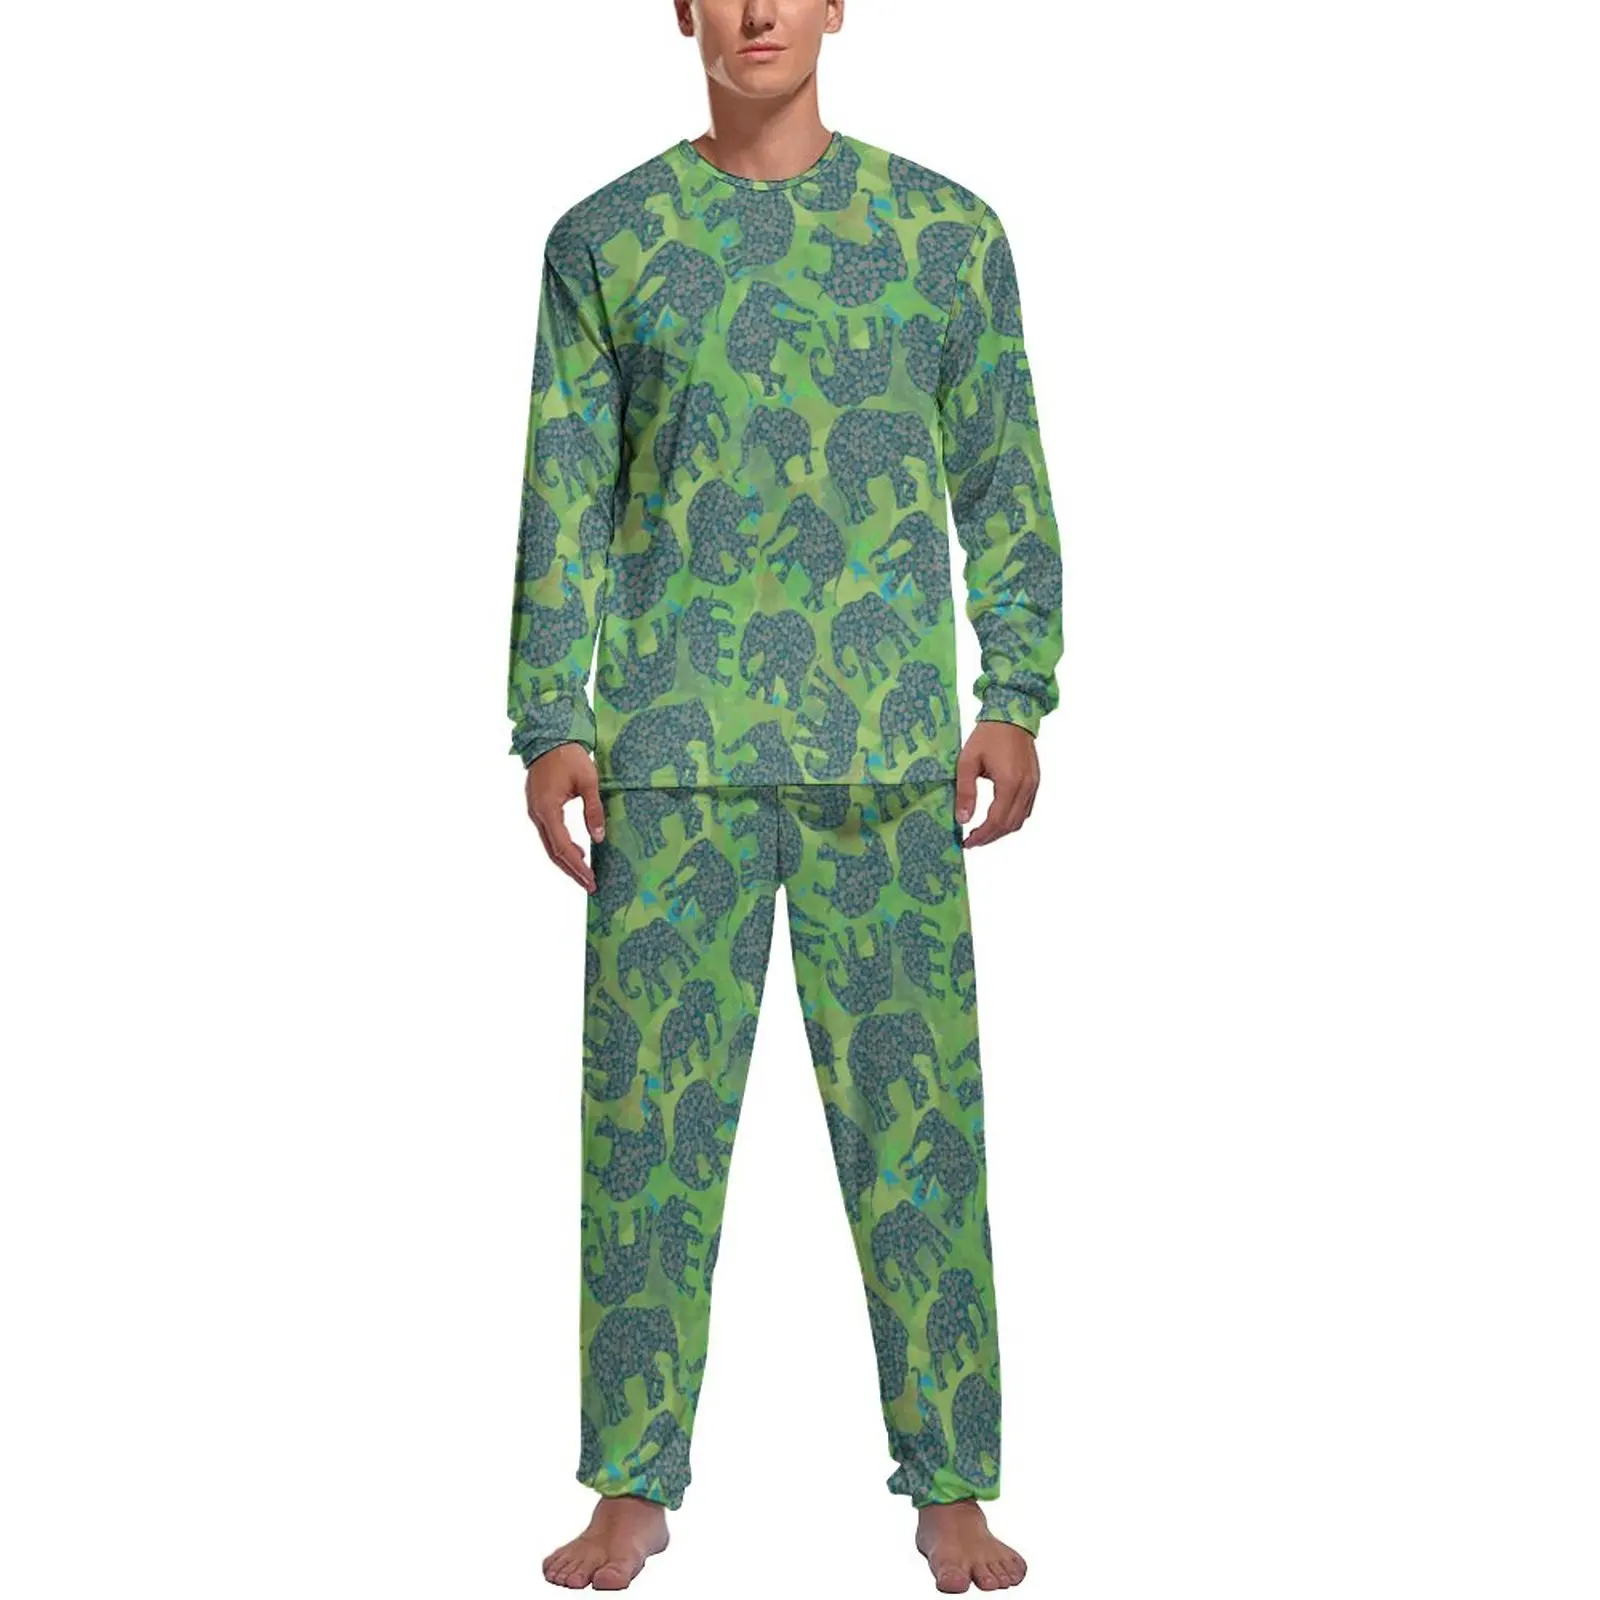 Cute Paisley Elephant Pajamas Autumn Green Jungle Leaves Bedroom Nightwear Men 2 Pieces Graphic Long Sleeve Cute Pajama Sets